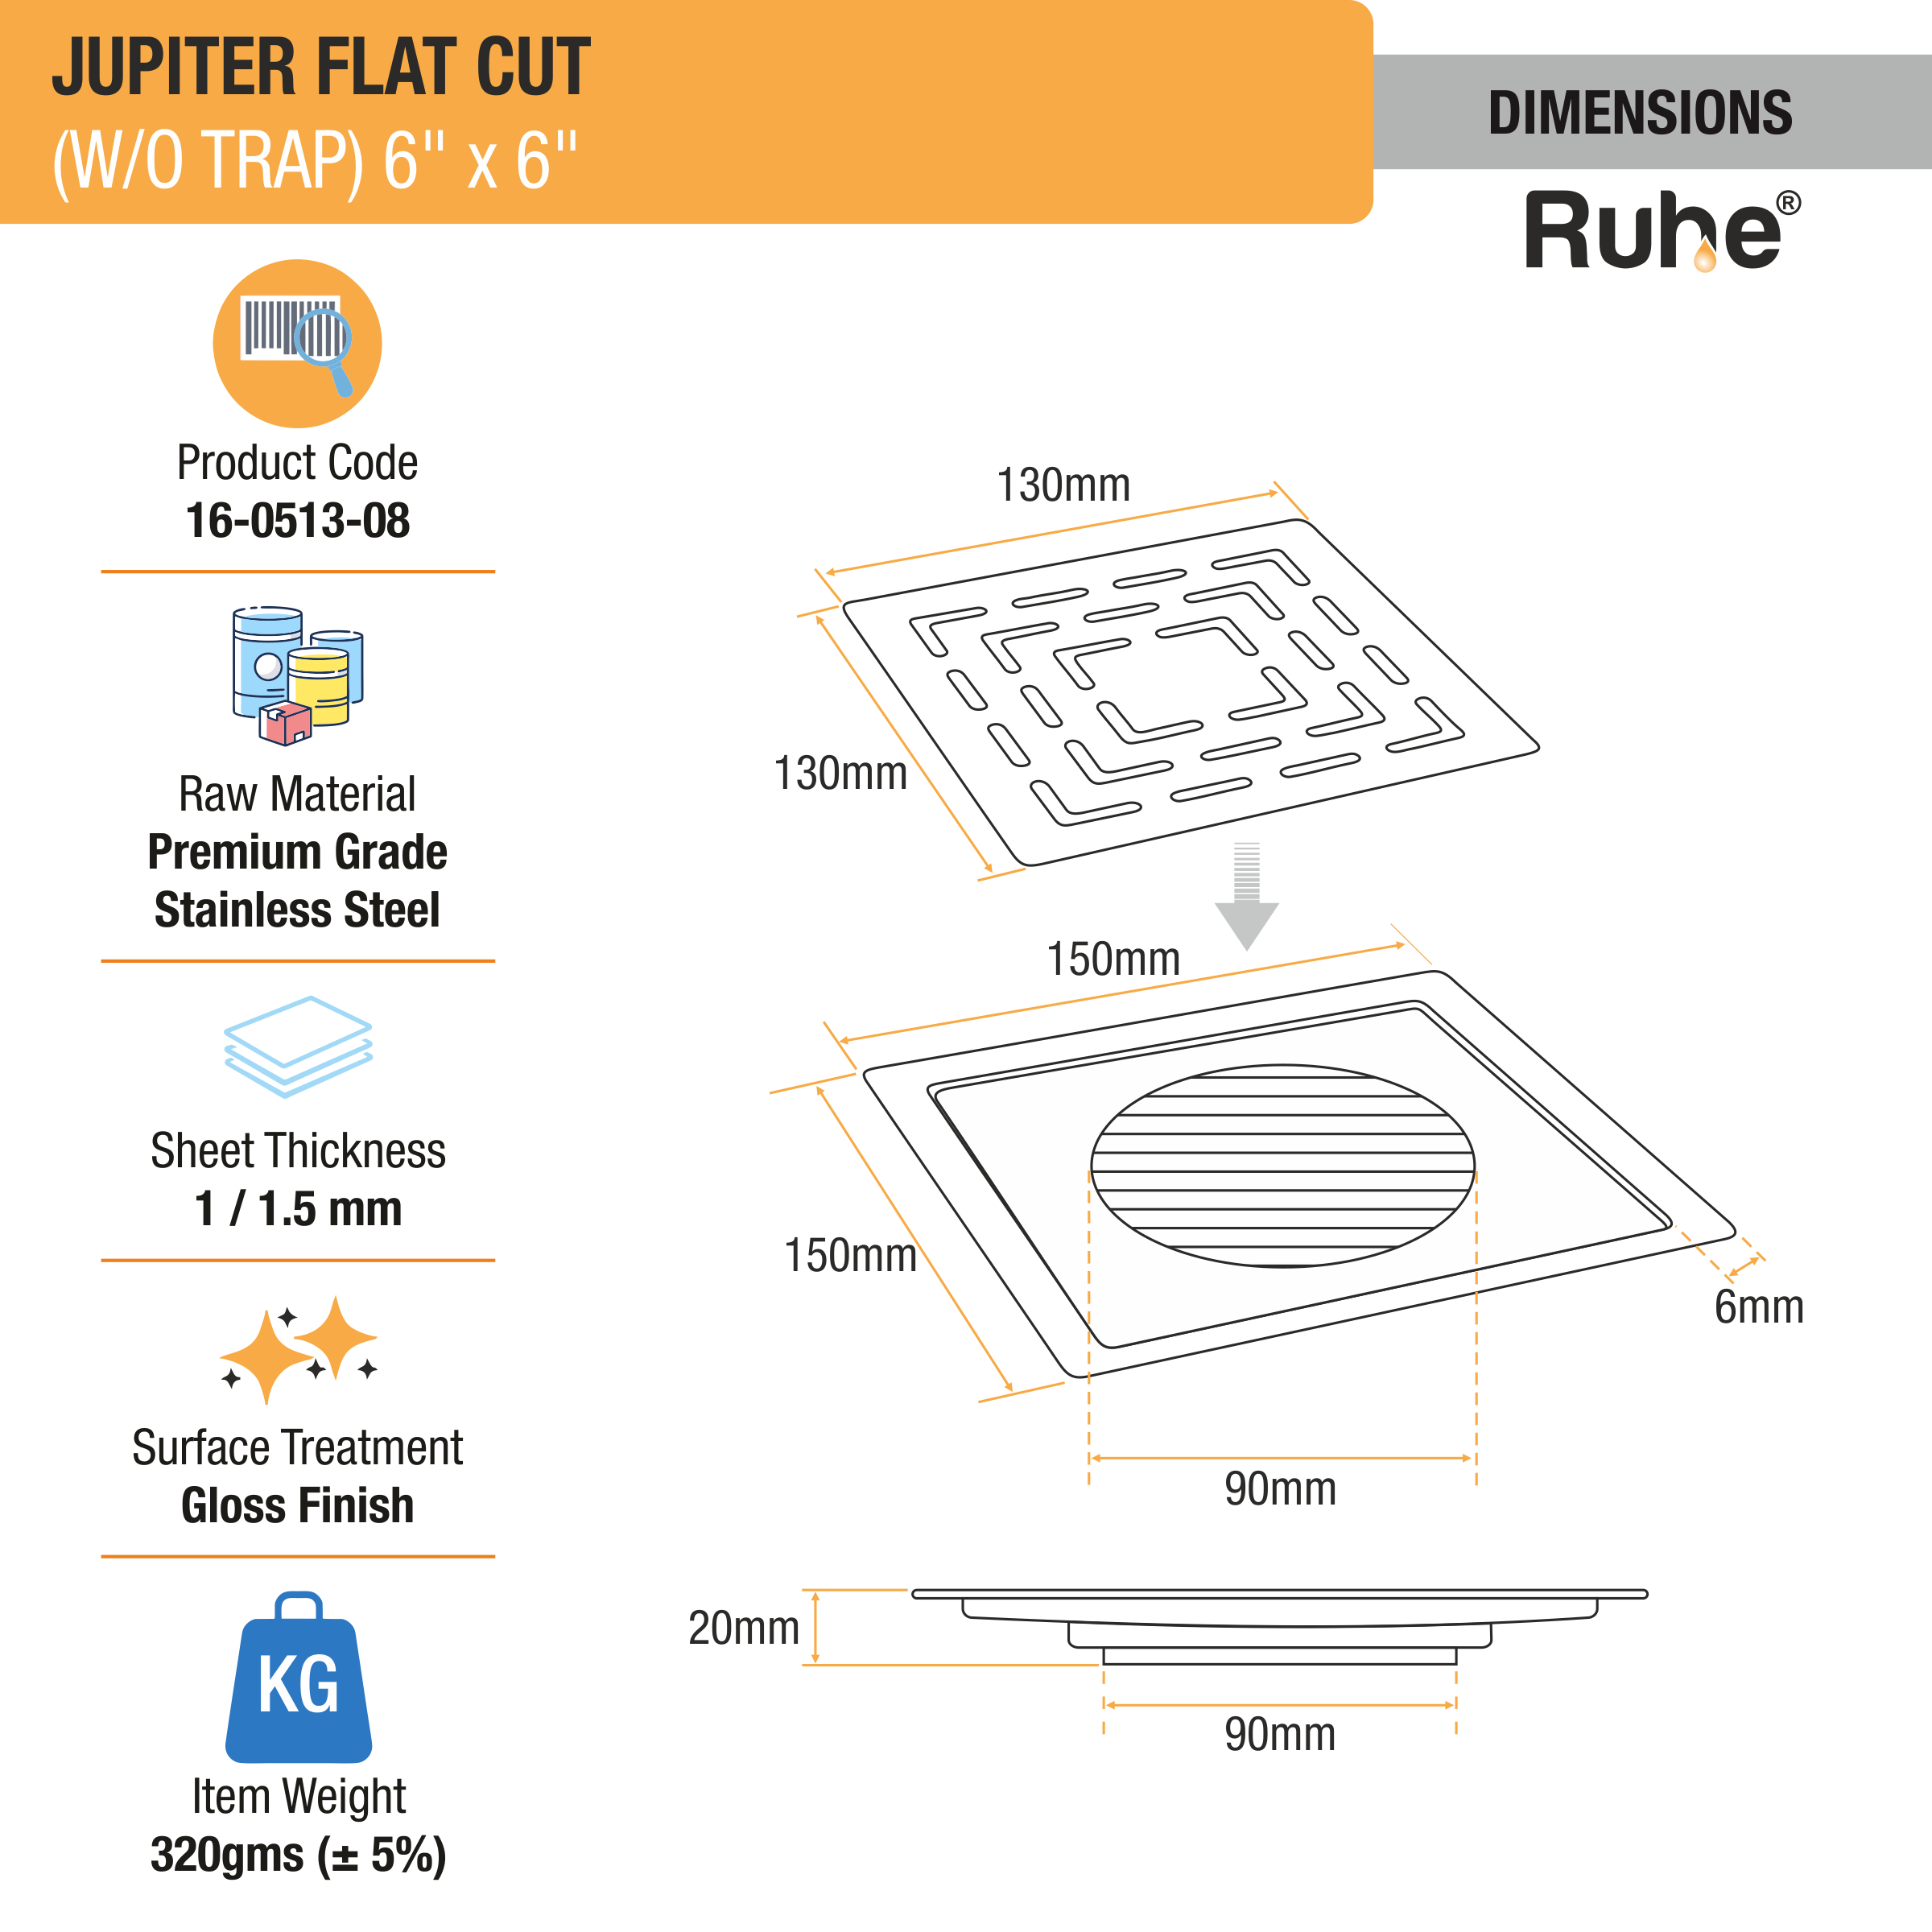 Jupiter Square Premium Flat Cut Floor Drain (6 x 6 Inches) dimensions and sizes